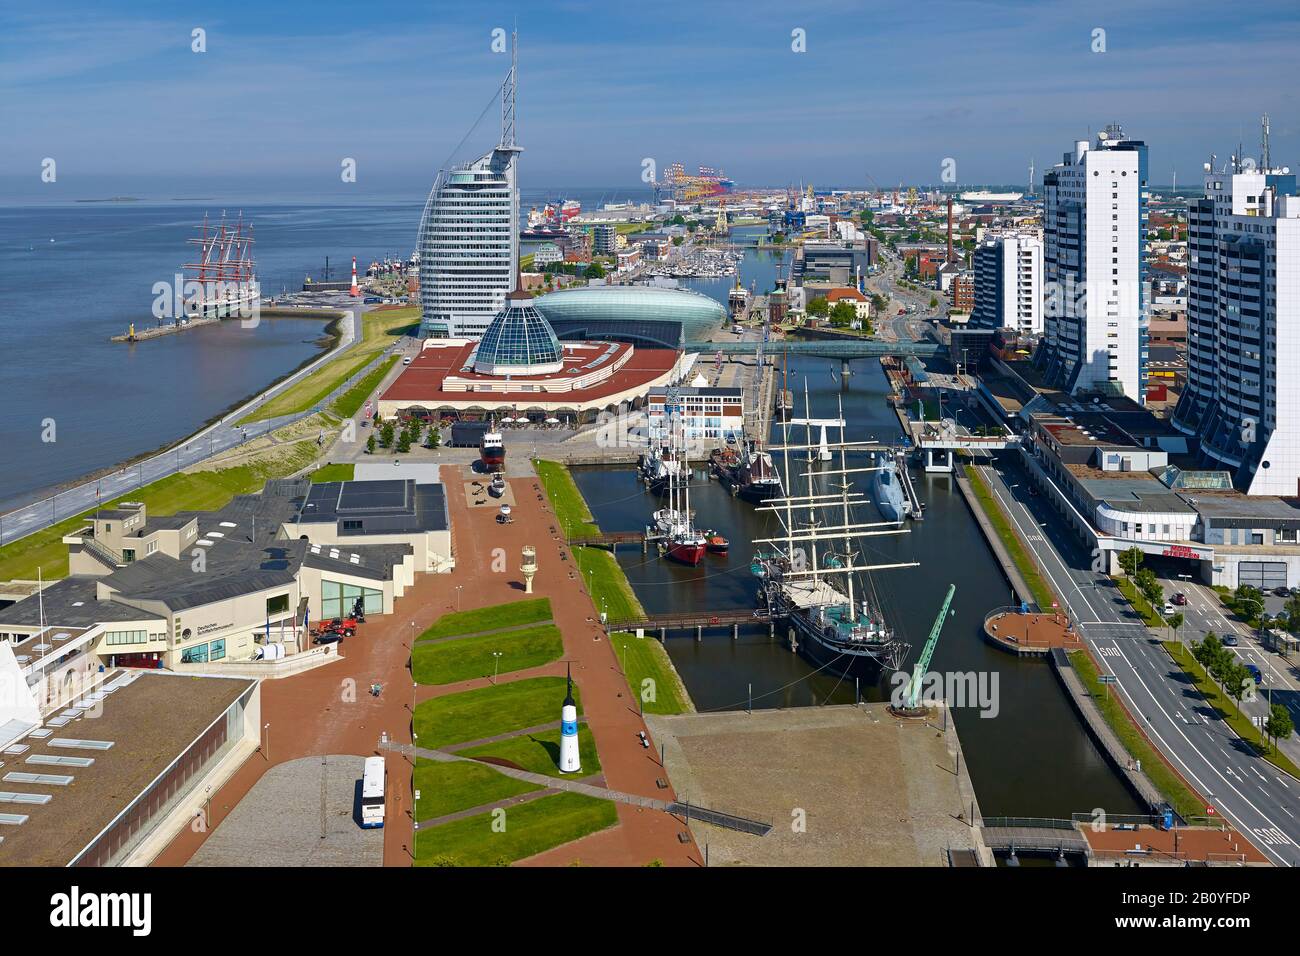 City view over Museumshafen, Atlantic-Sail-City-Hotel, Klimahaus, Columbus Center, Bremerhaven, Bremen, Germany, Stock Photo